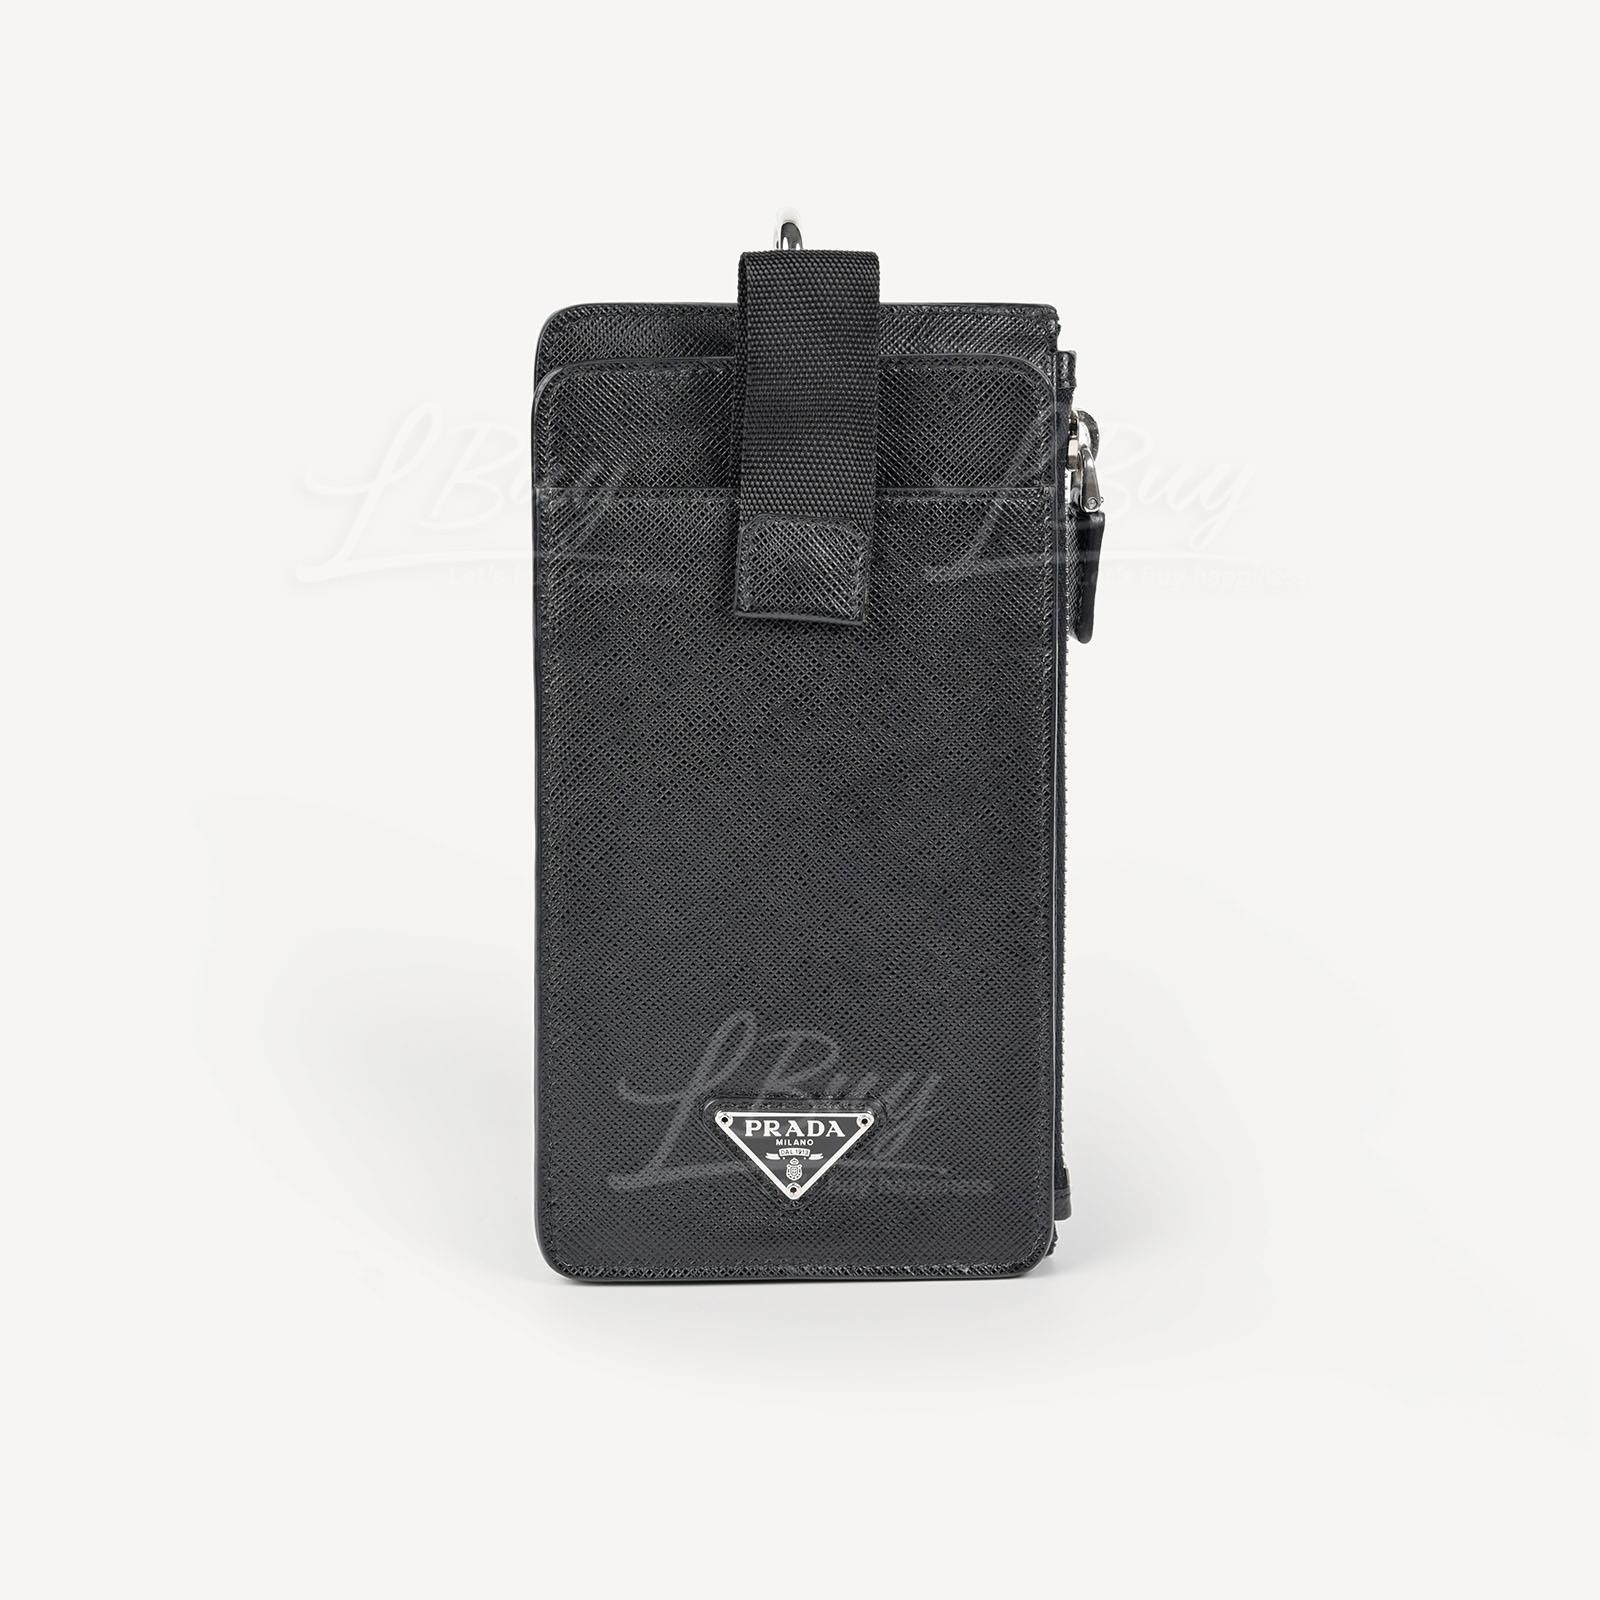 Prada Saffiano Leather Wallet Smartphone Case with Strap 2ZH094